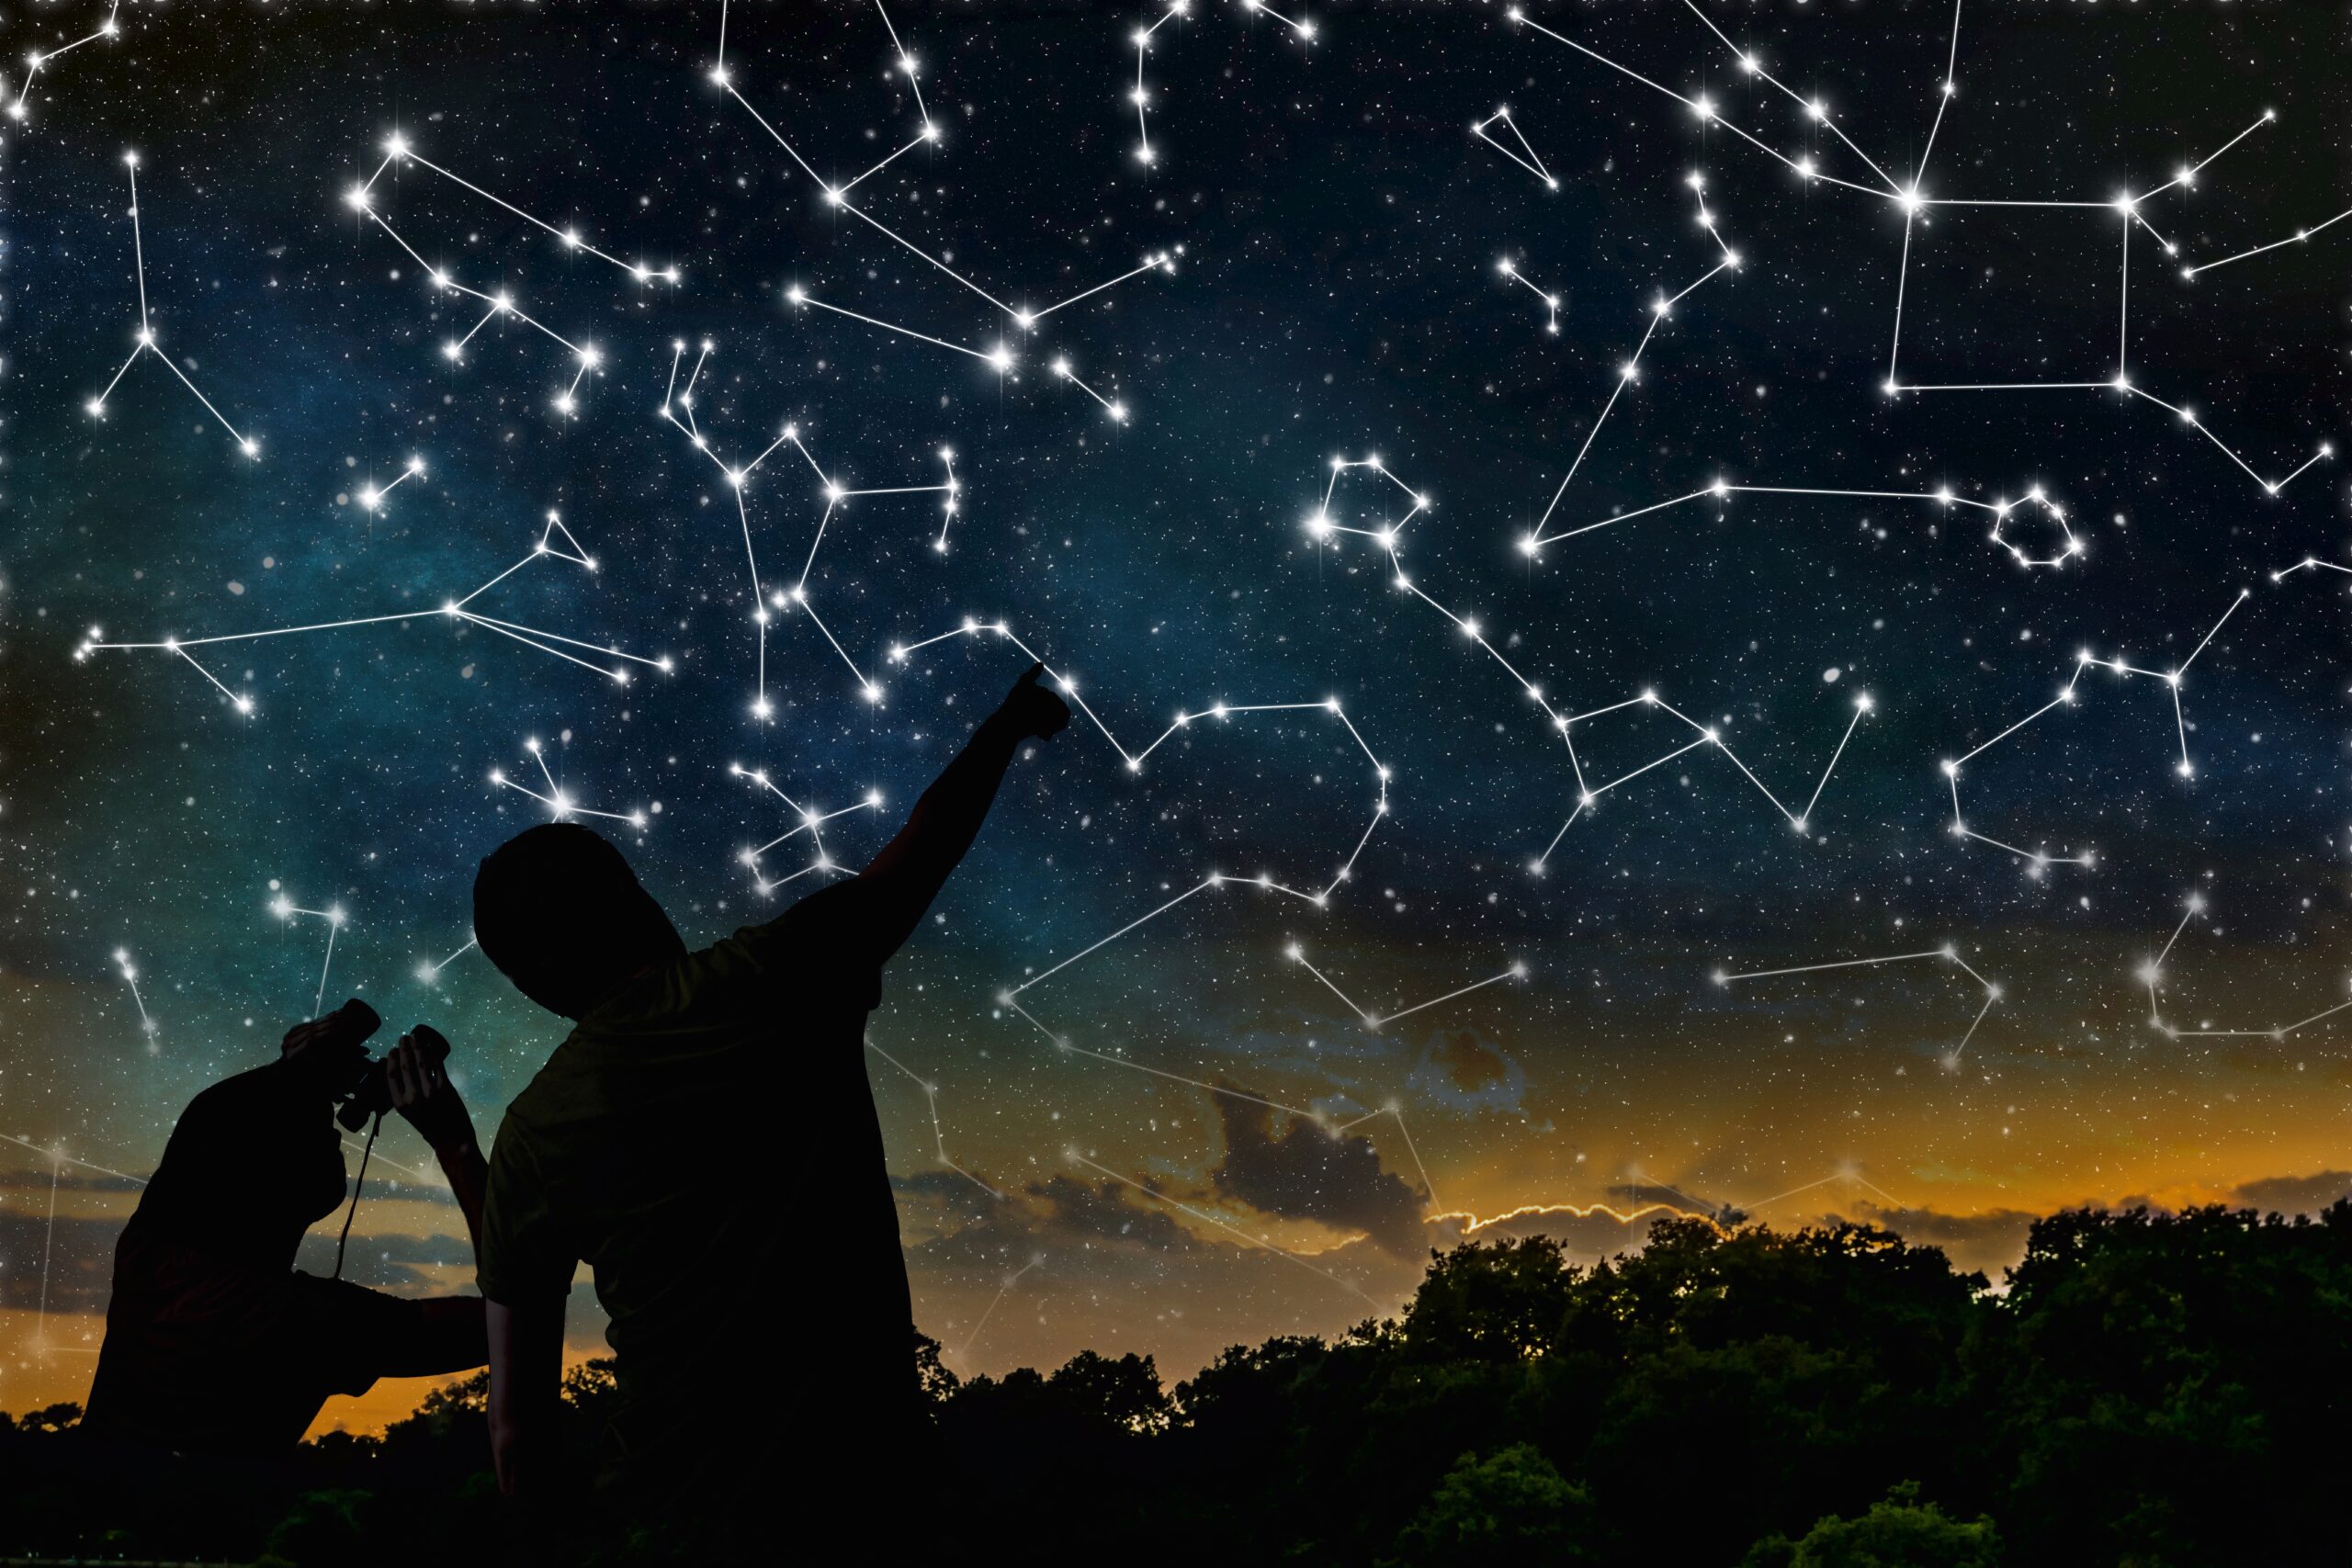 Погляди на небо инструкция. Созвездие Орион. Звезда с неба. Человек на фоне звездного неба. Звездное небо созвездия.